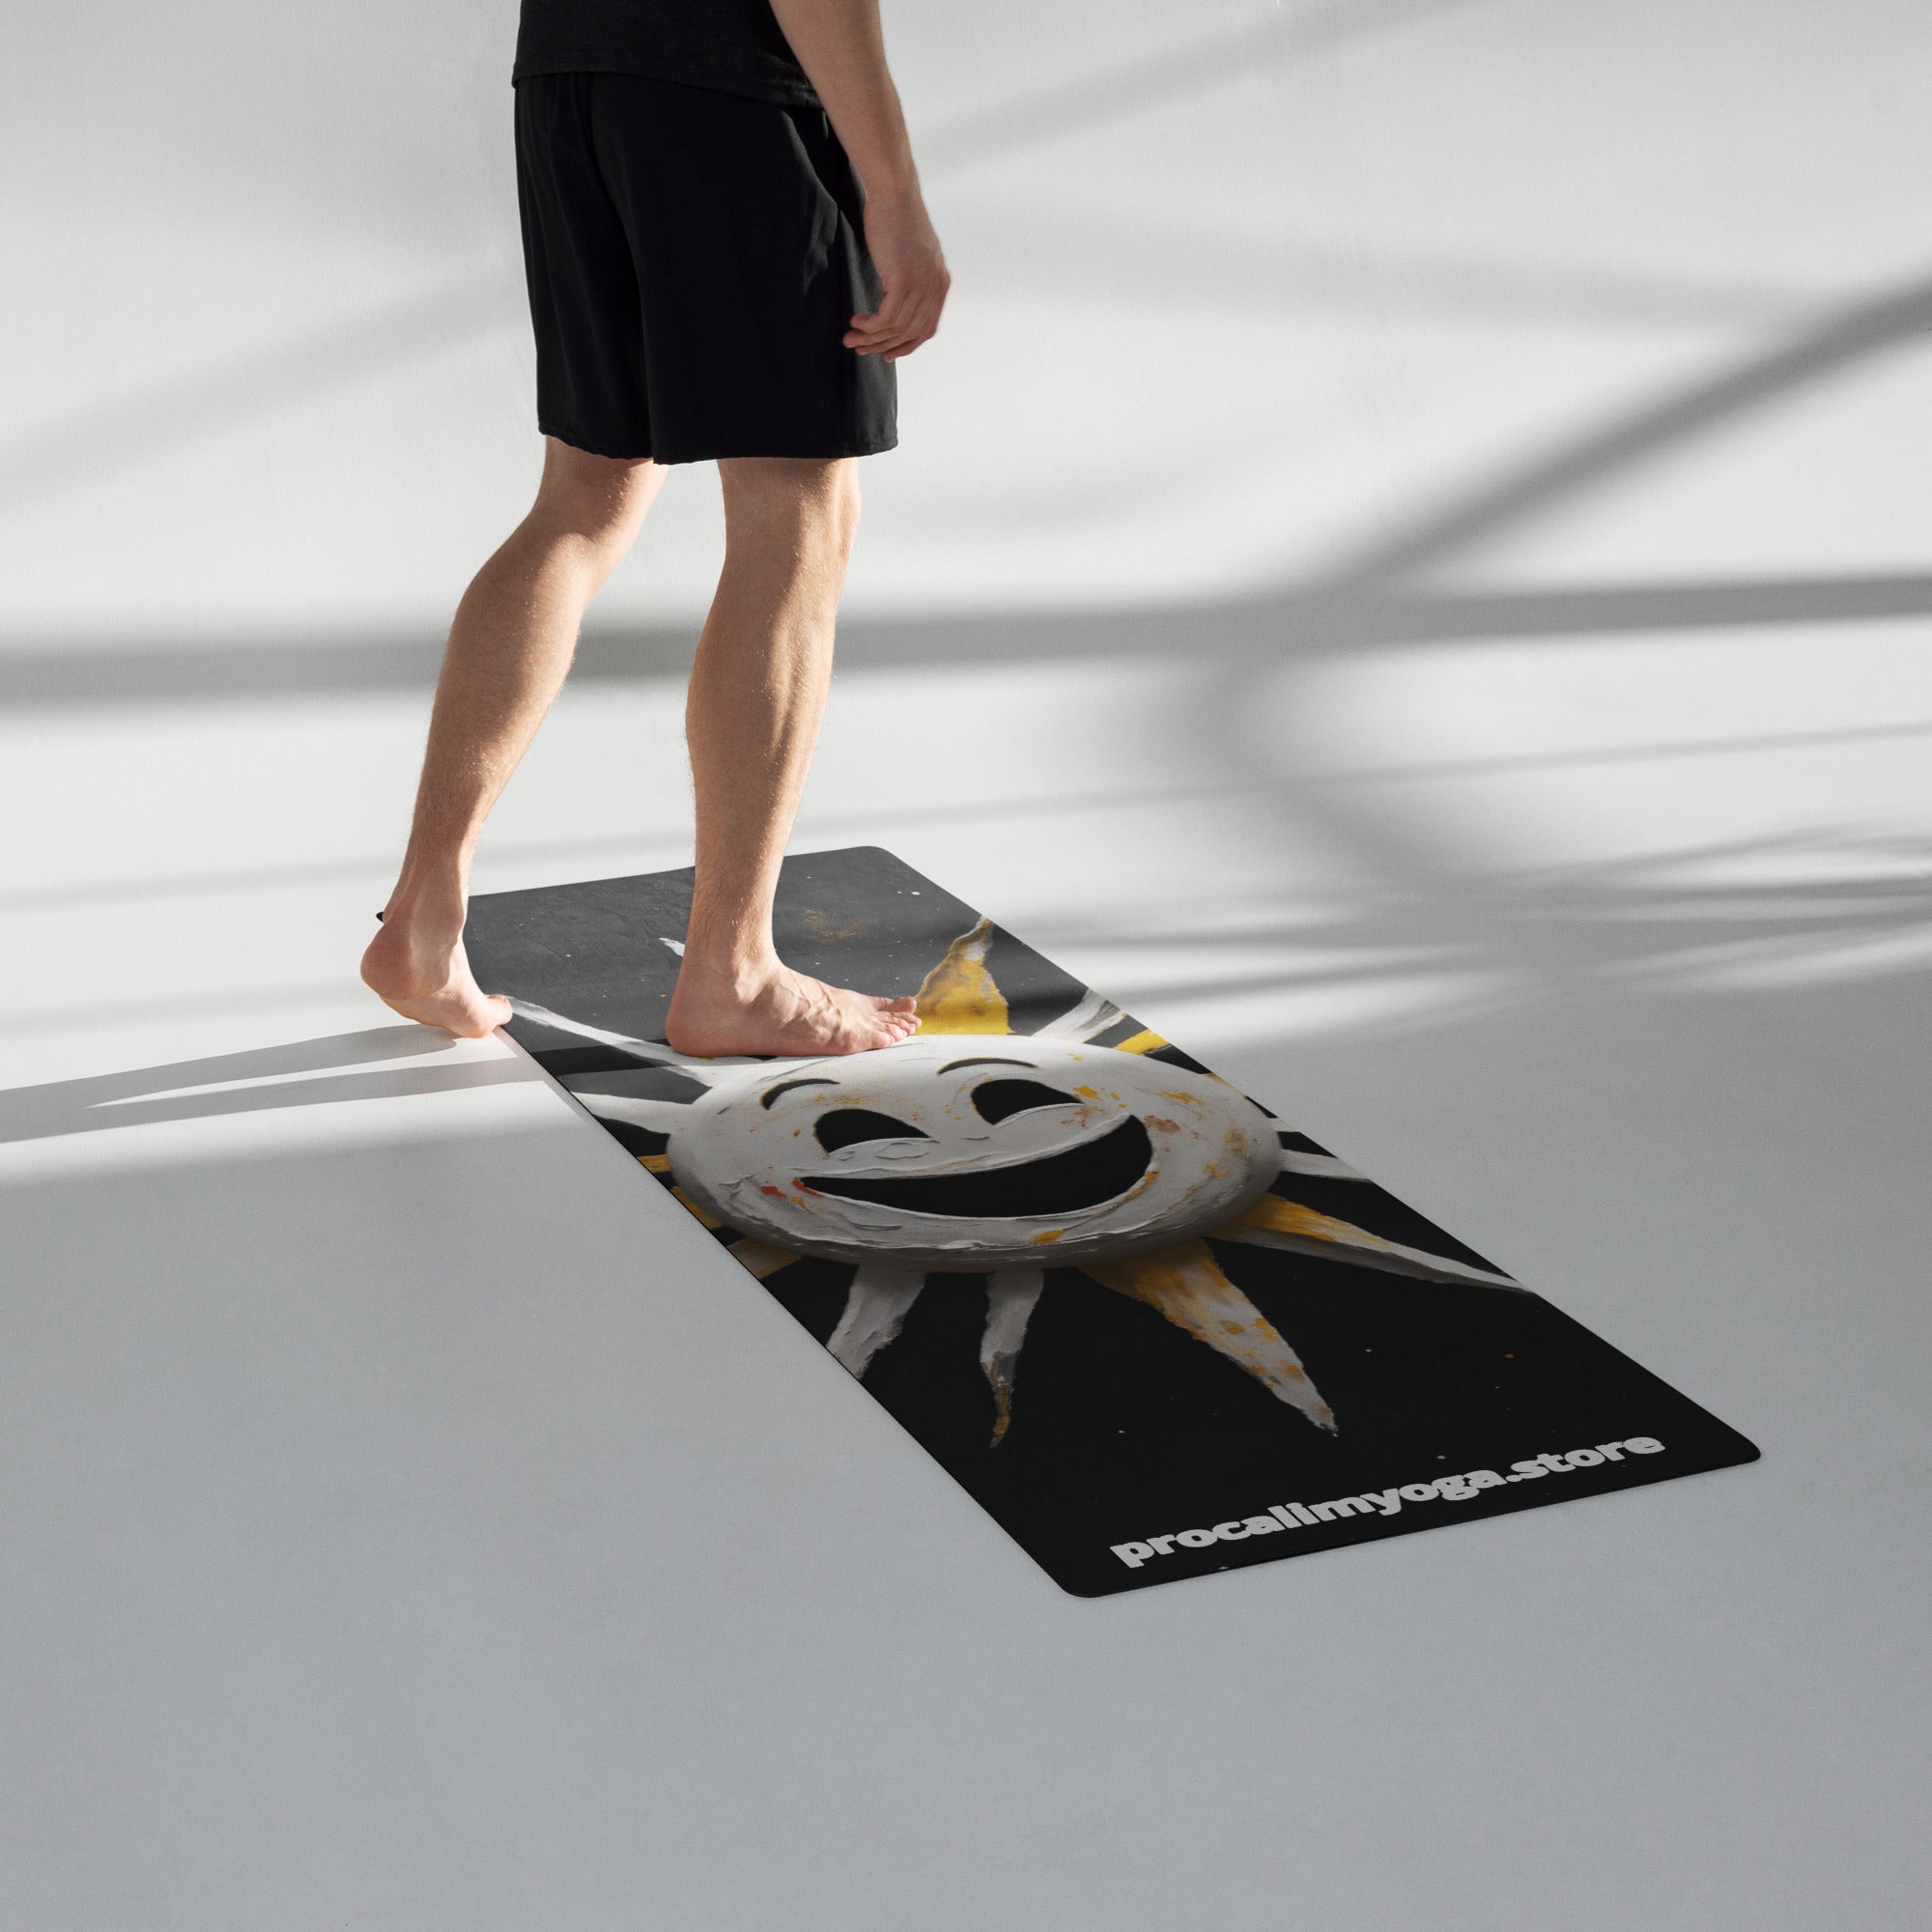 "Ultimate Grip Hot Yoga Mat - Slip-Resistant and Durable"